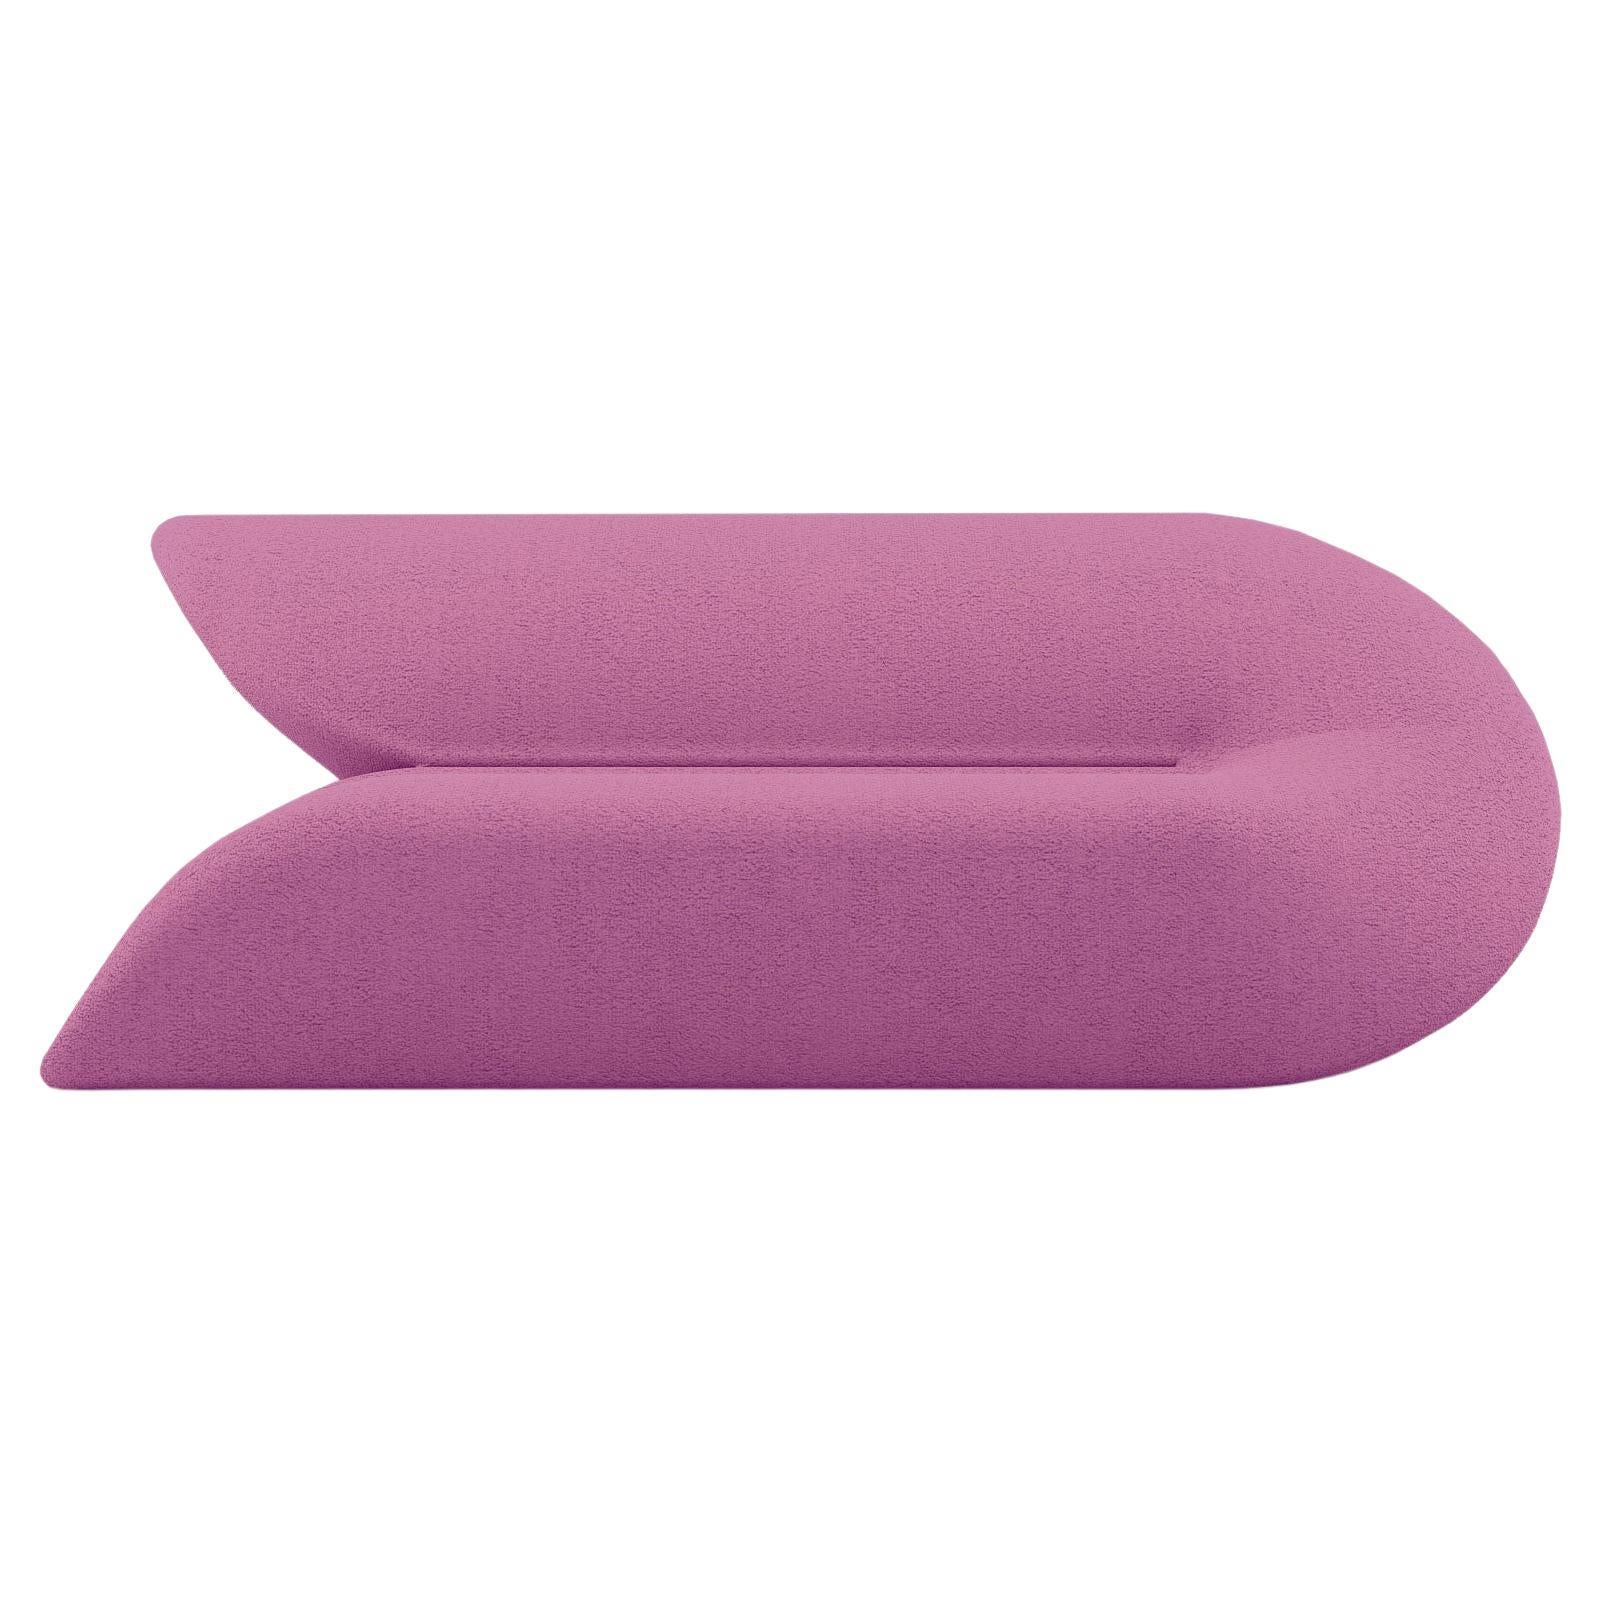 Delta Sofa - Modern Violet Upholstered Three Seat Sofa For Sale